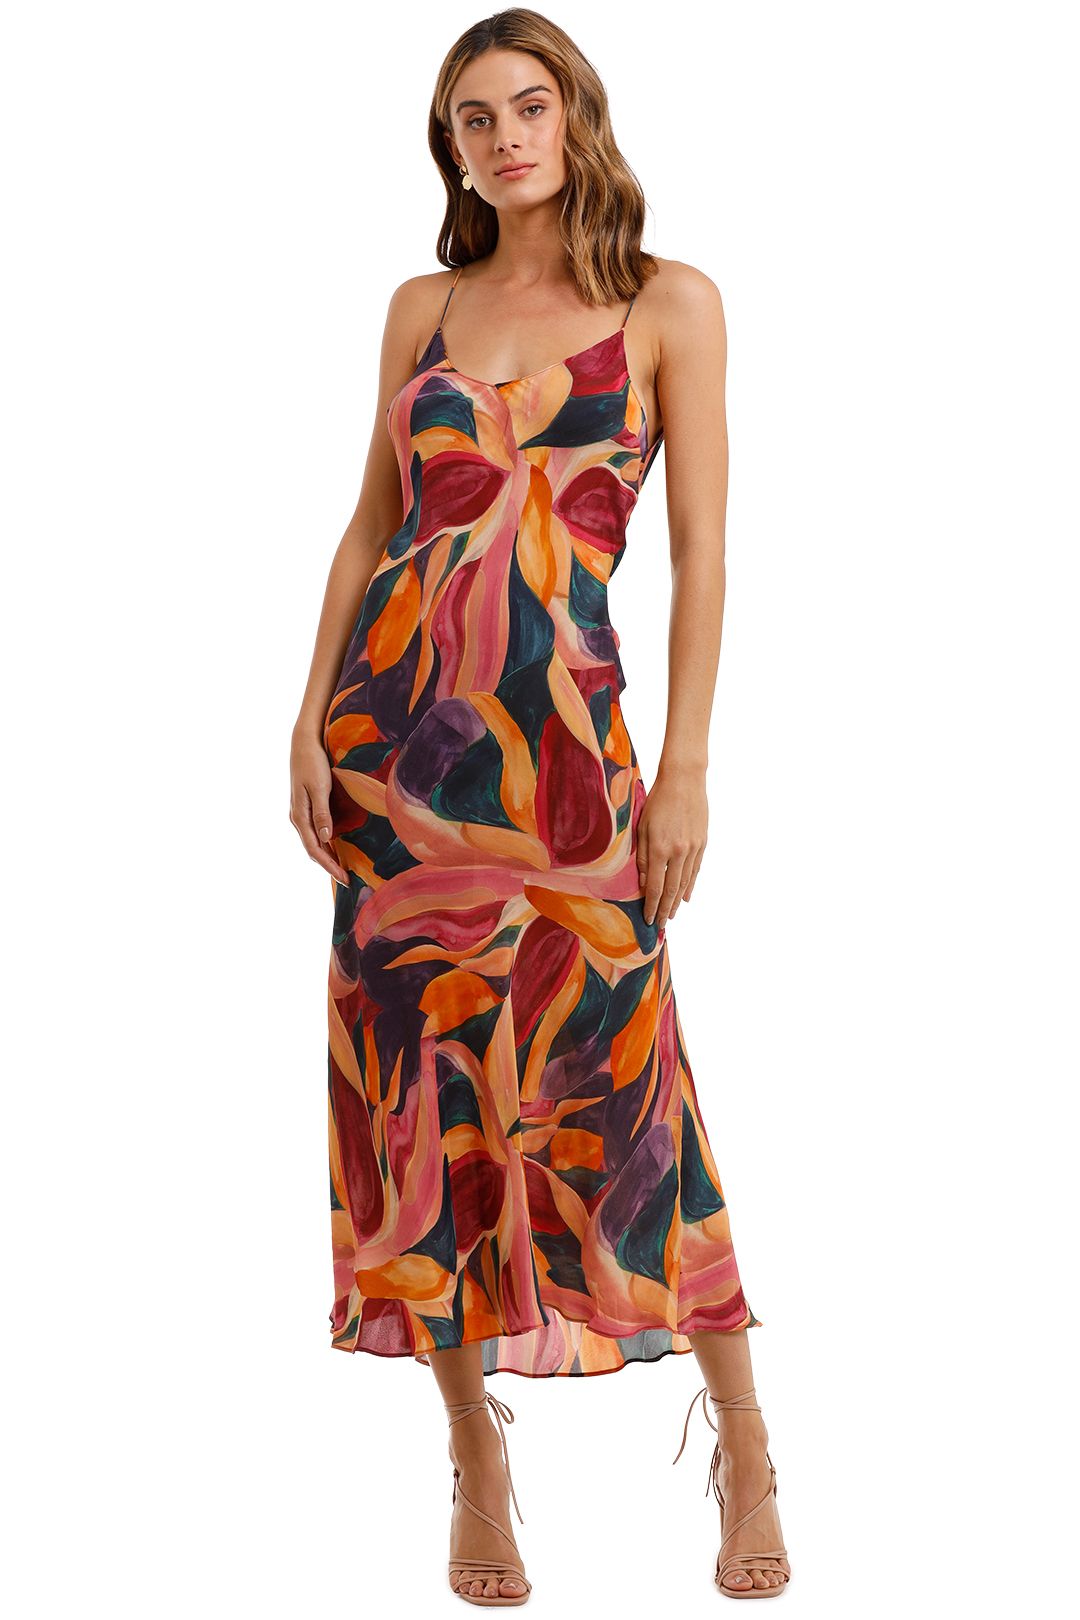 Kachel Billie Dress floral print